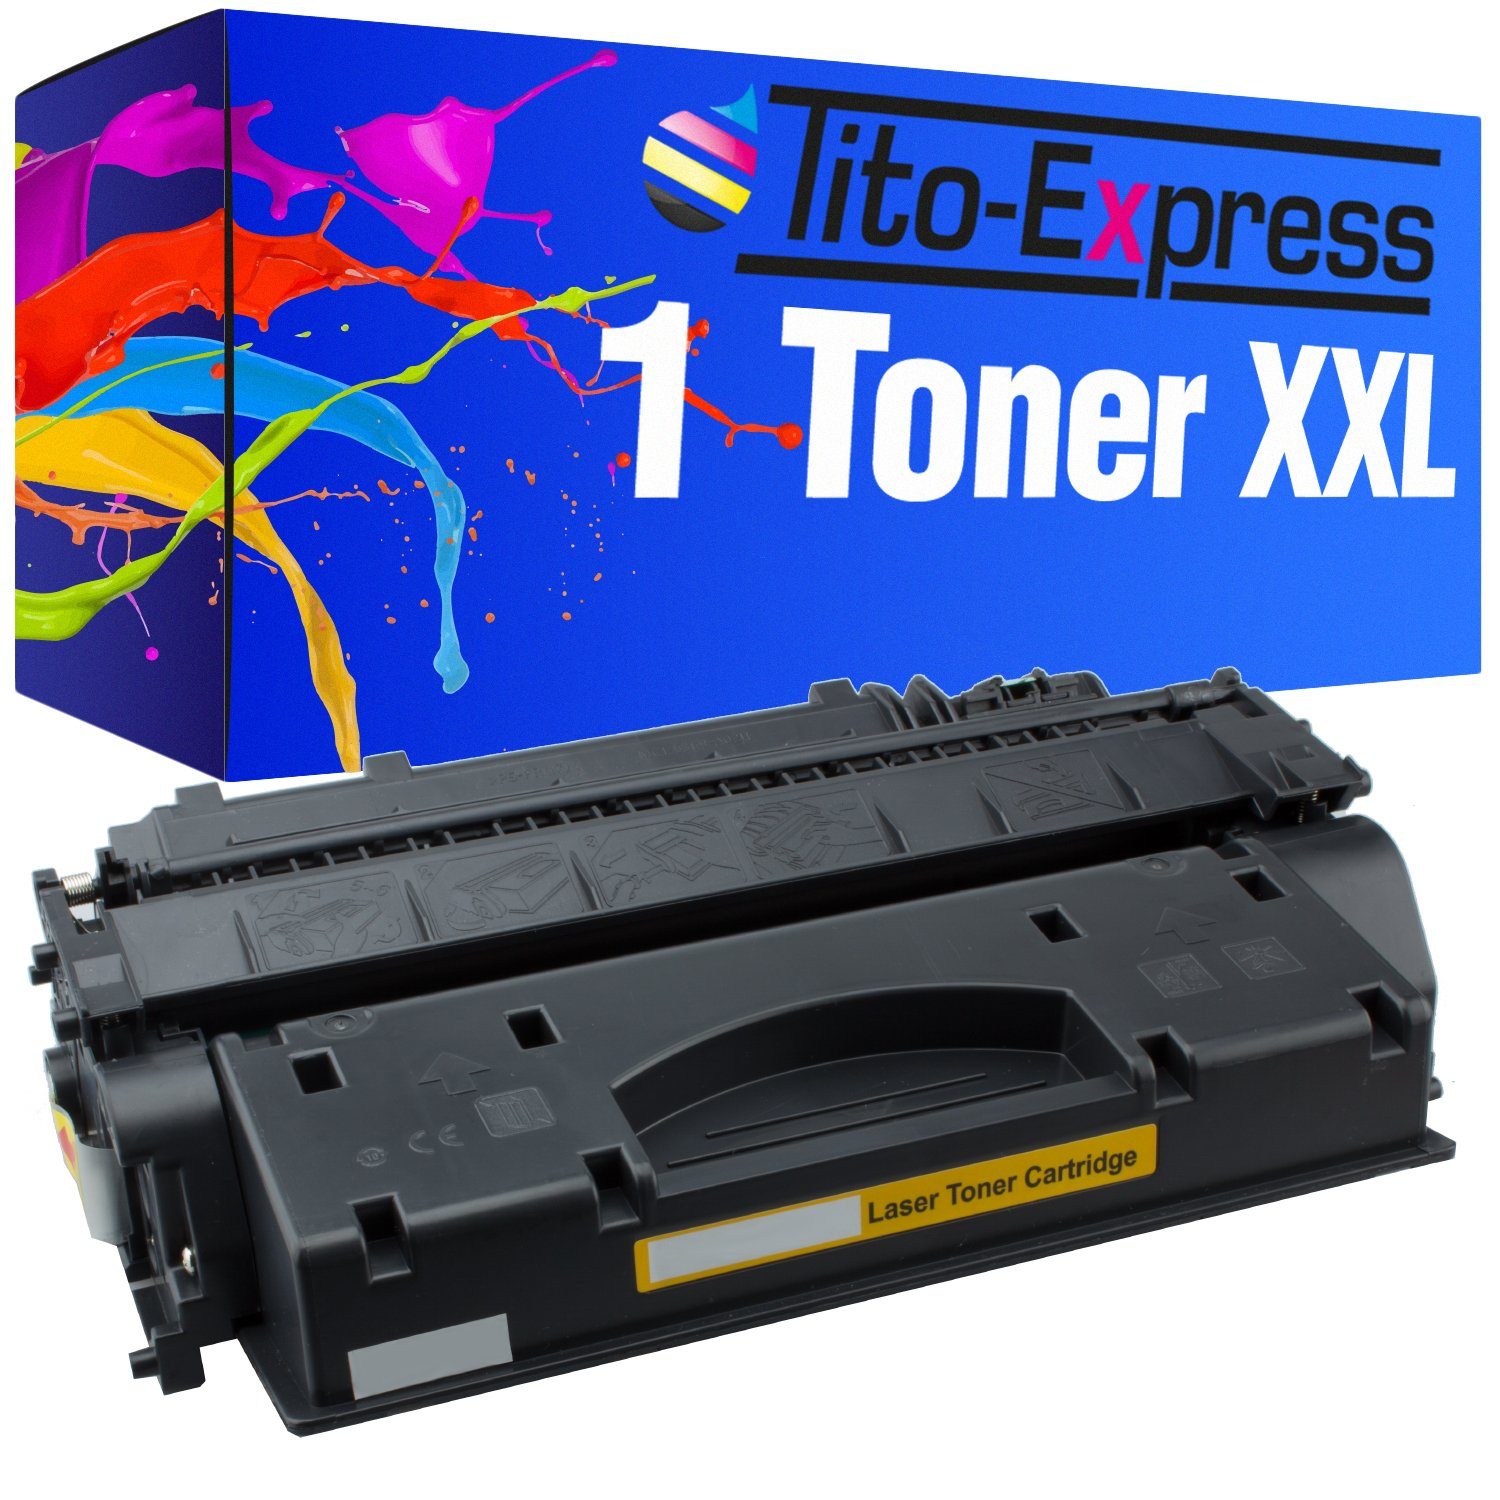 Tito-Express Tonerpatrone ersetzt HP CF 280 X HP CF 280X HPCF280X HP 80X Black, (1x Black), für Laserjet Pro 400 M401dn M401dw MFP M425dn M425dw